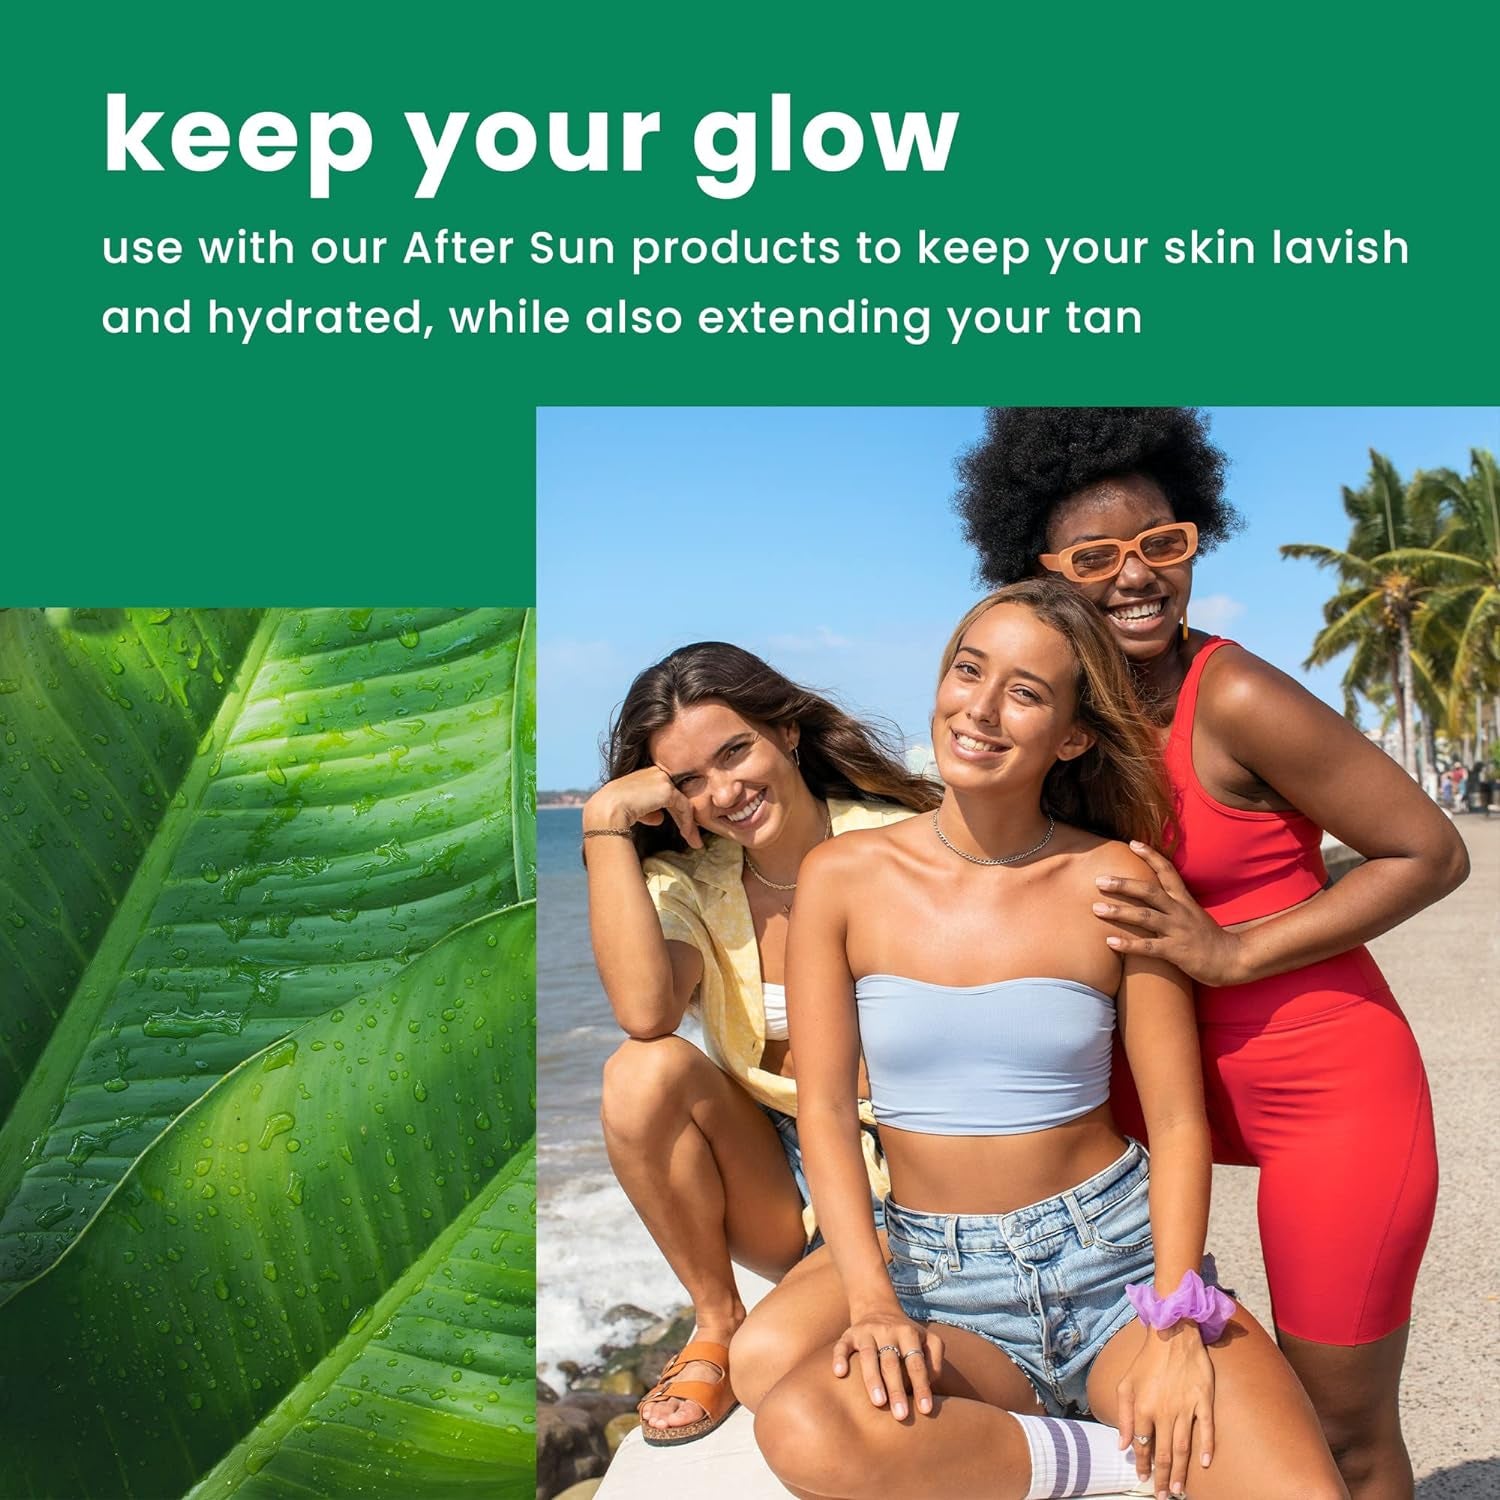 "Hawaiian Tropic Island Tanning Oil Spray Sunscreen SPF 6, 8Oz Twin Pack"